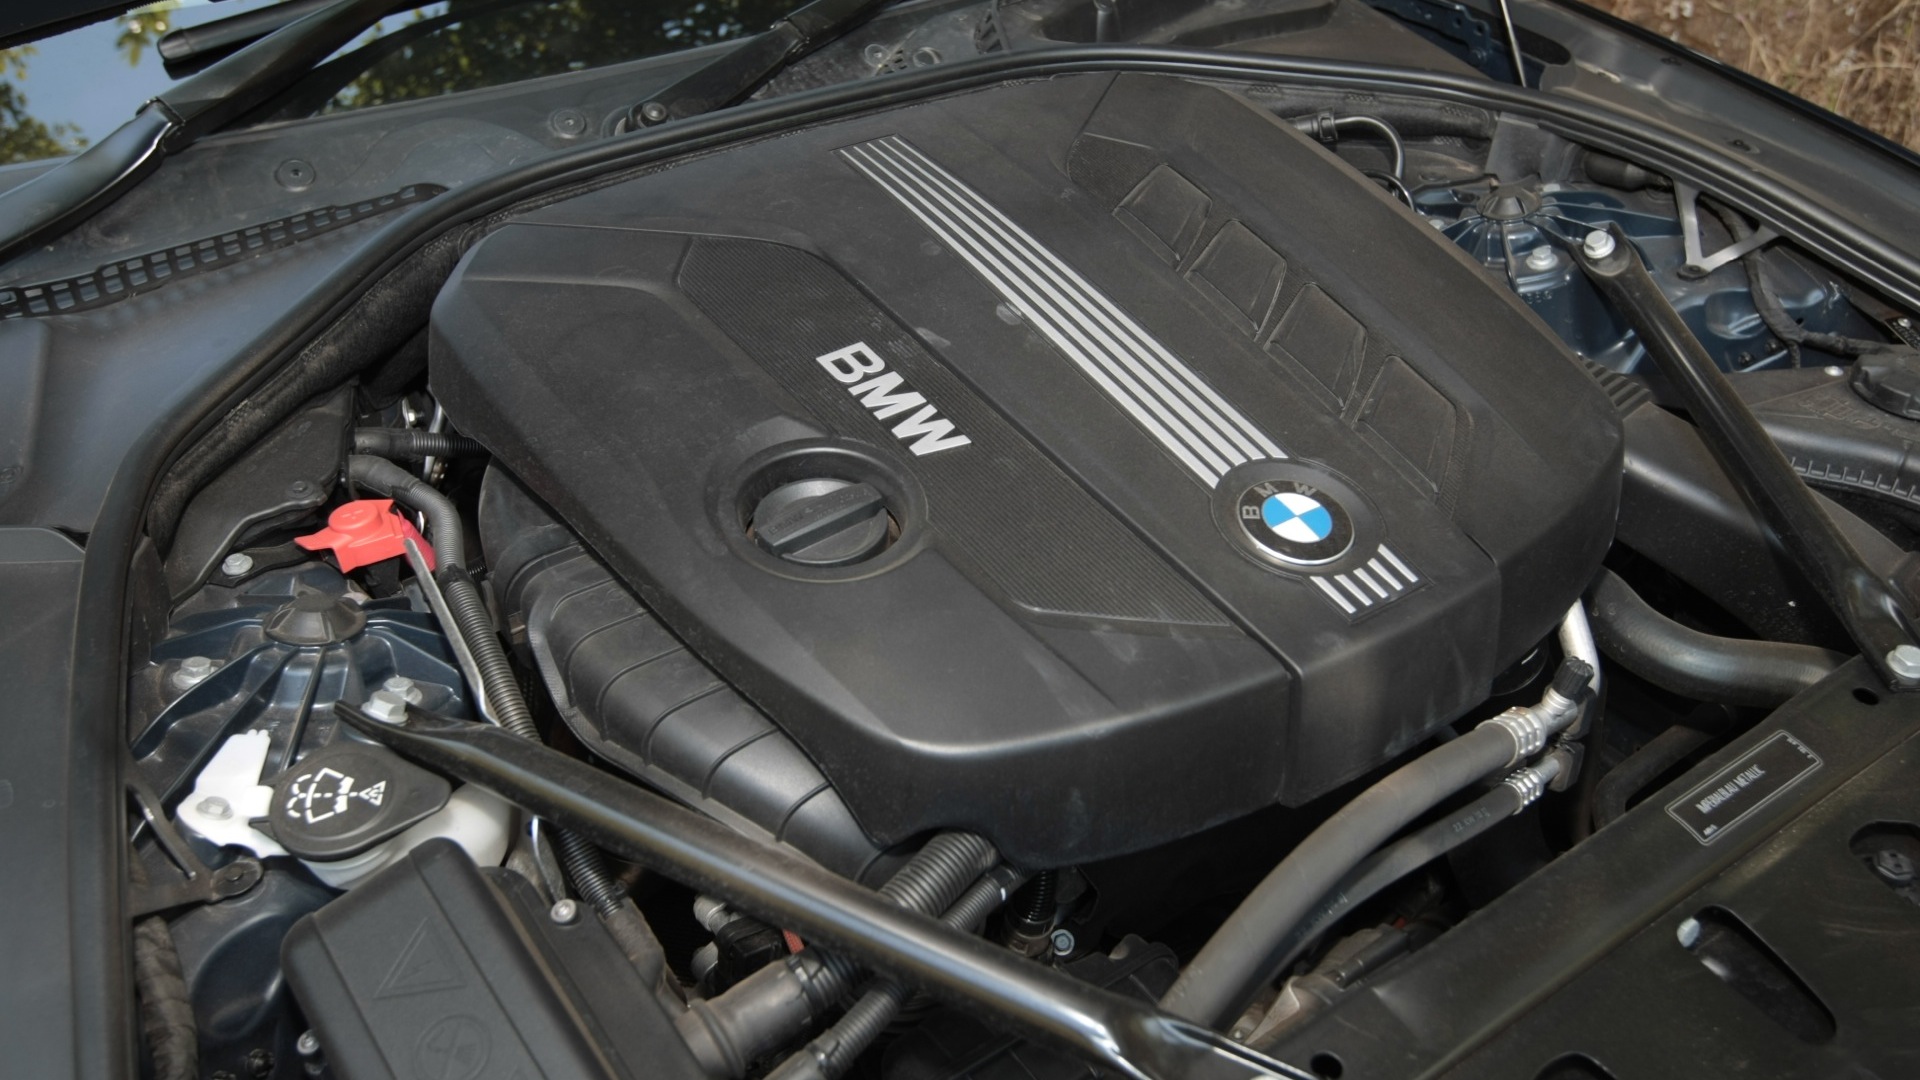 BMW-5-Series-2012-520d-Interior